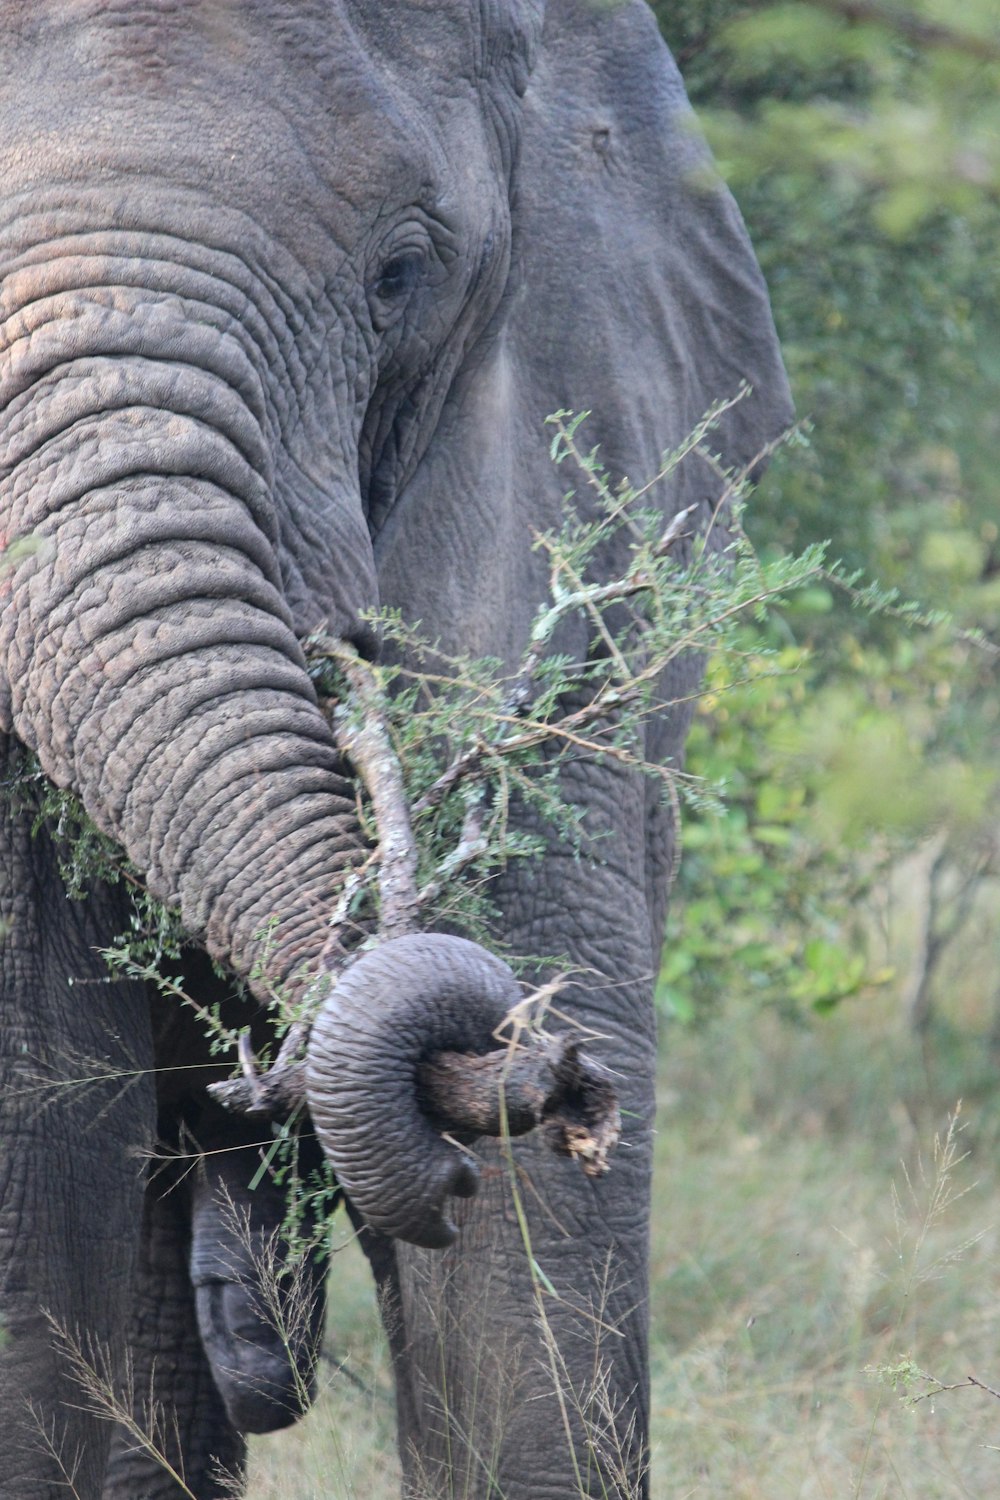 elephant eating grass during daytime